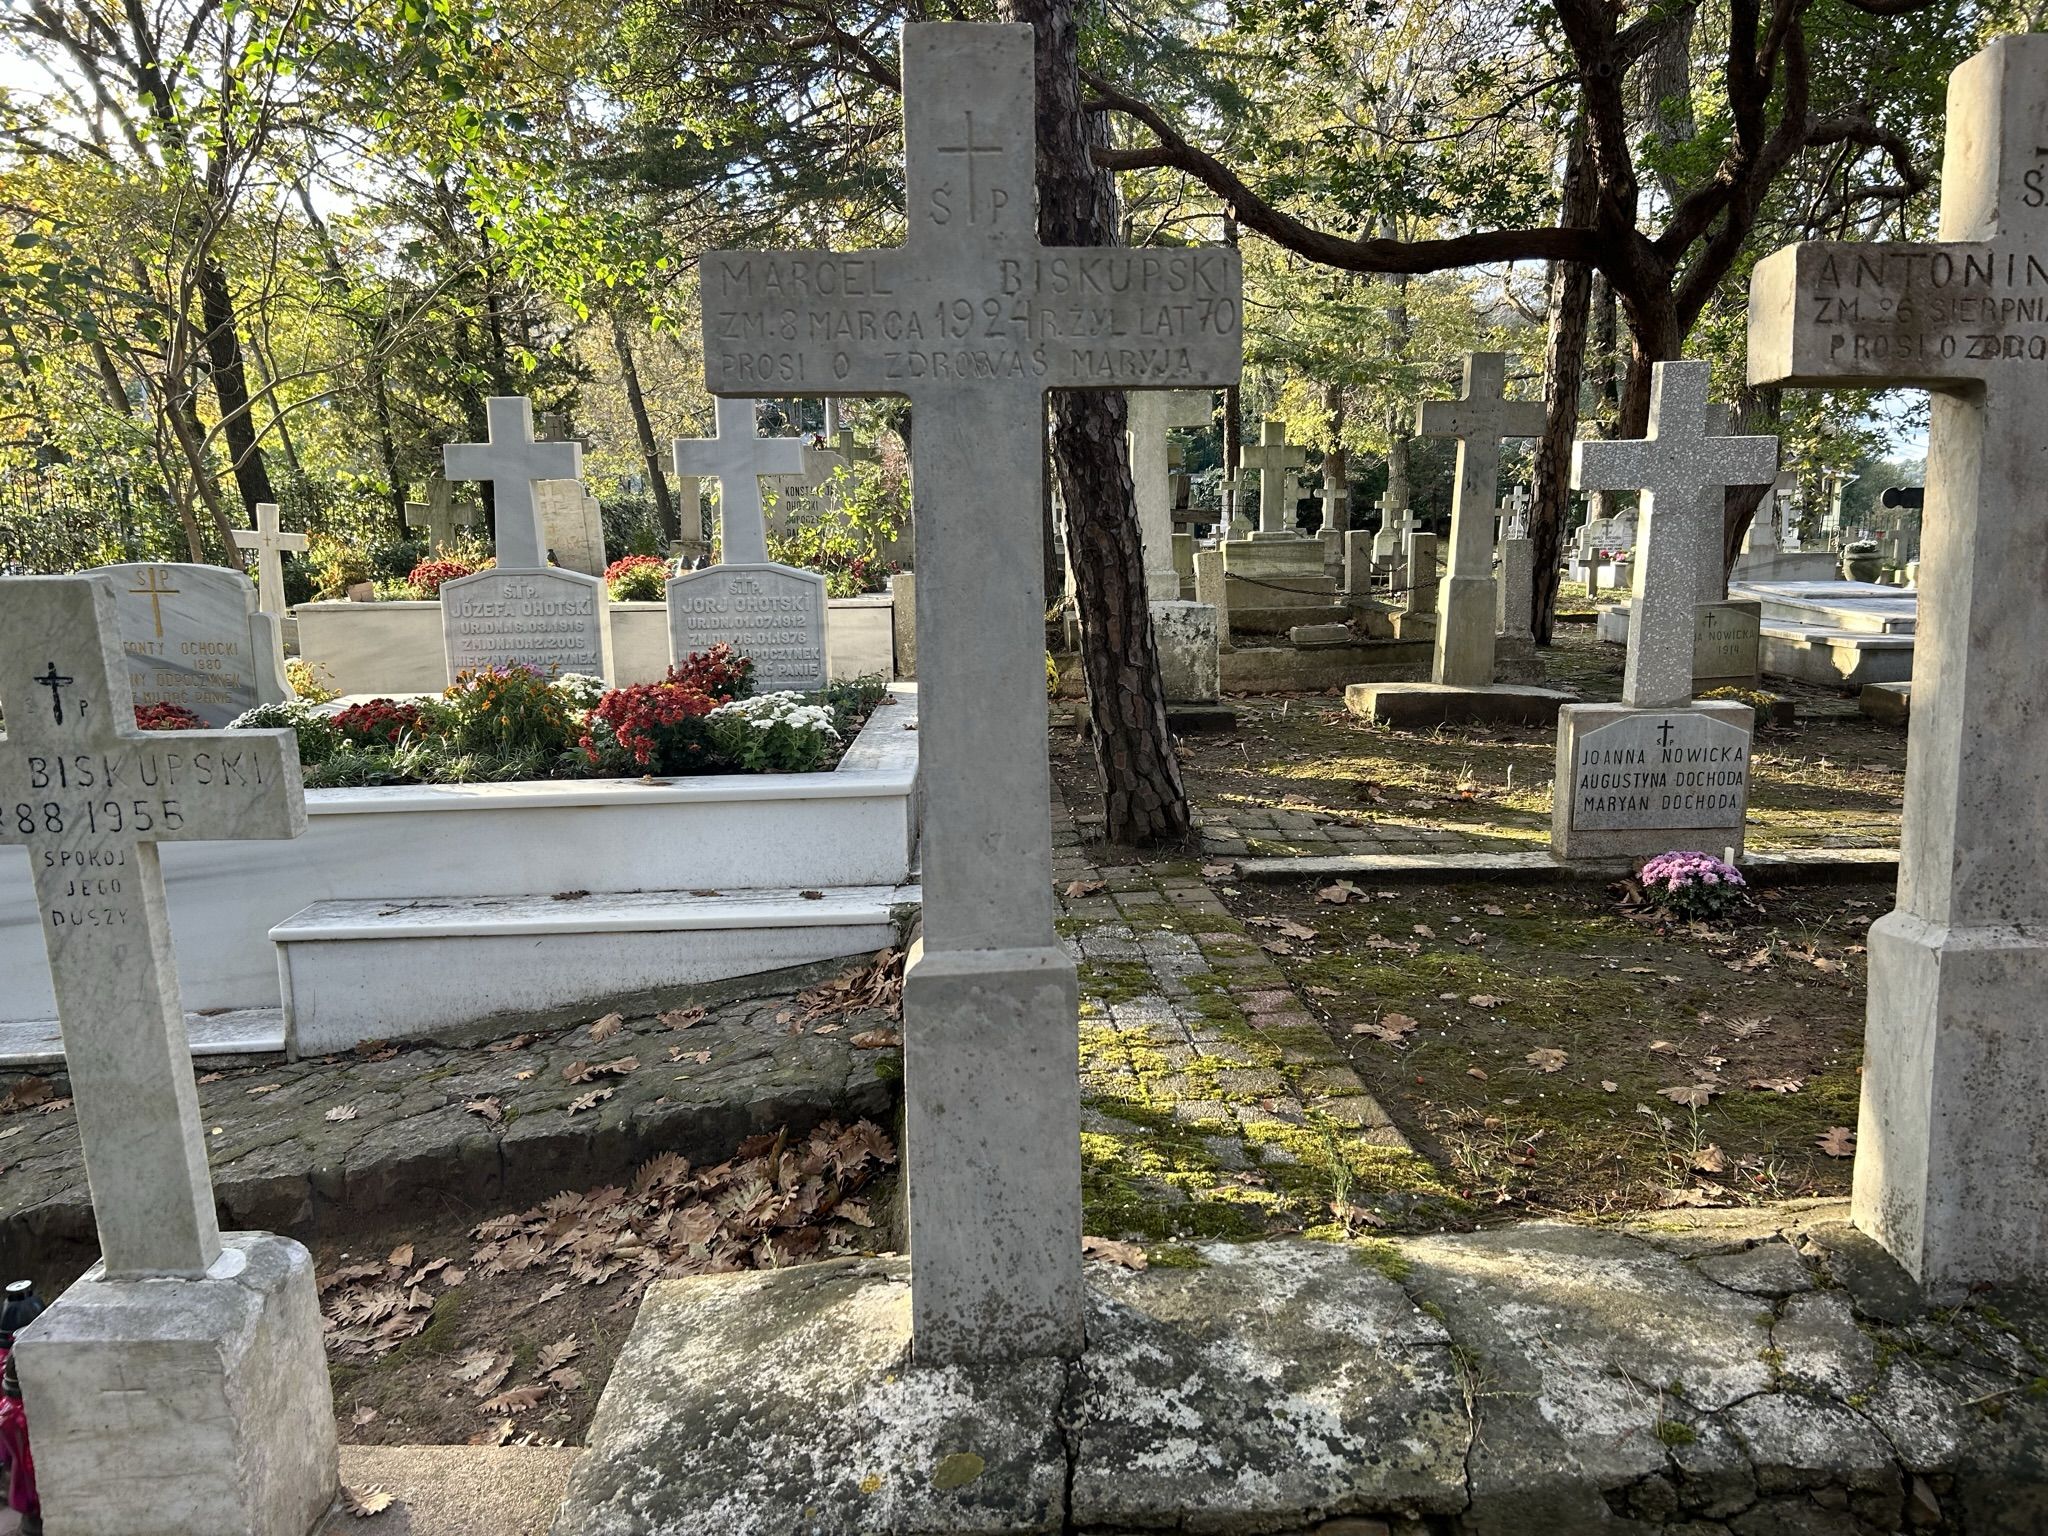 Tombstone of Marcel Biskupski, Catholic cemetery in Adampol